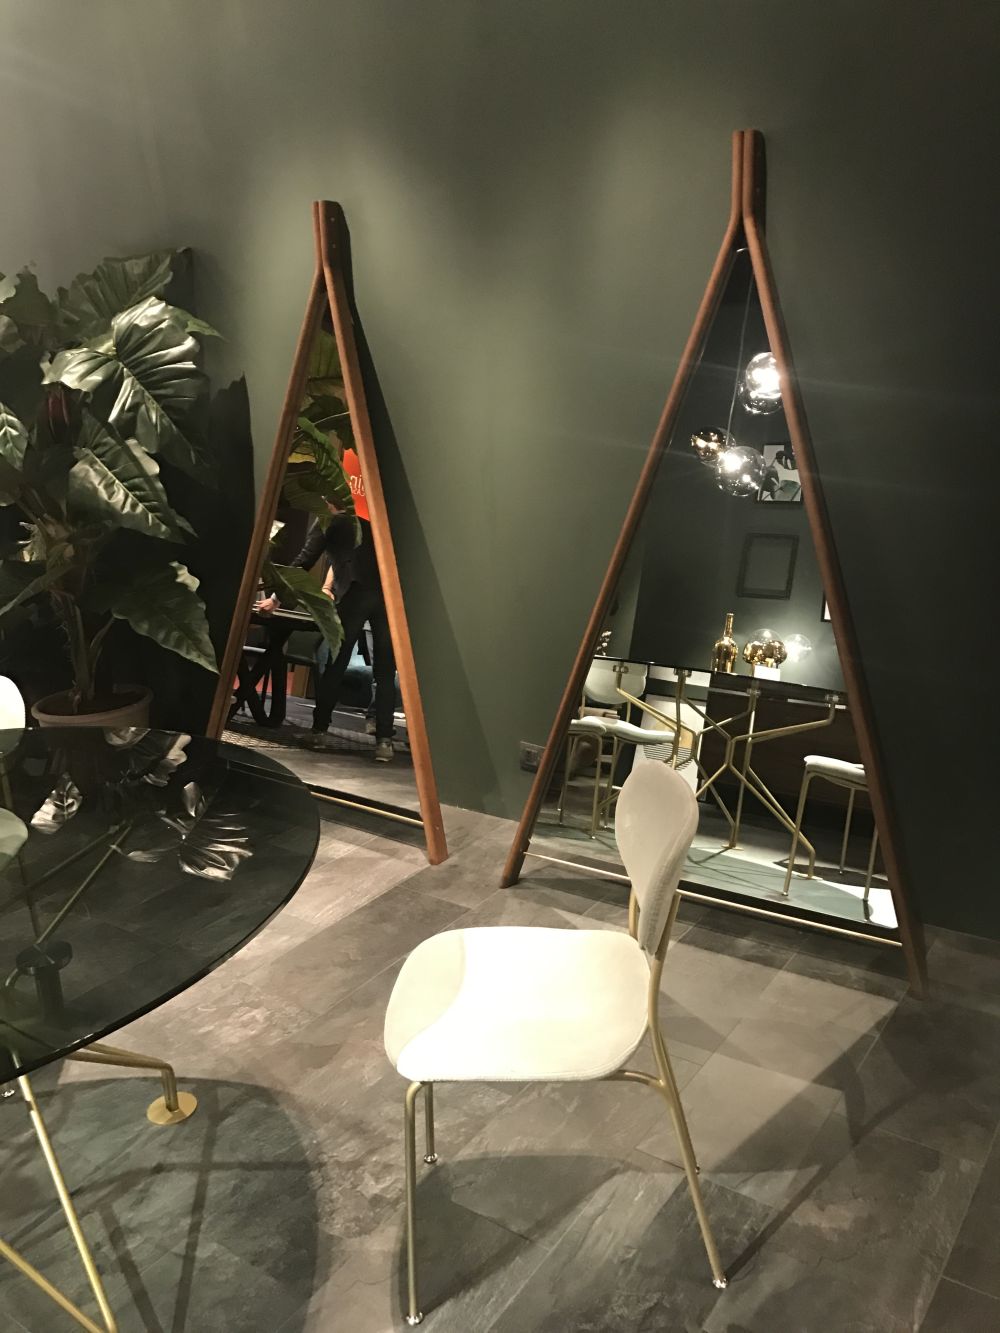 Floor Triangle decorative mirrors